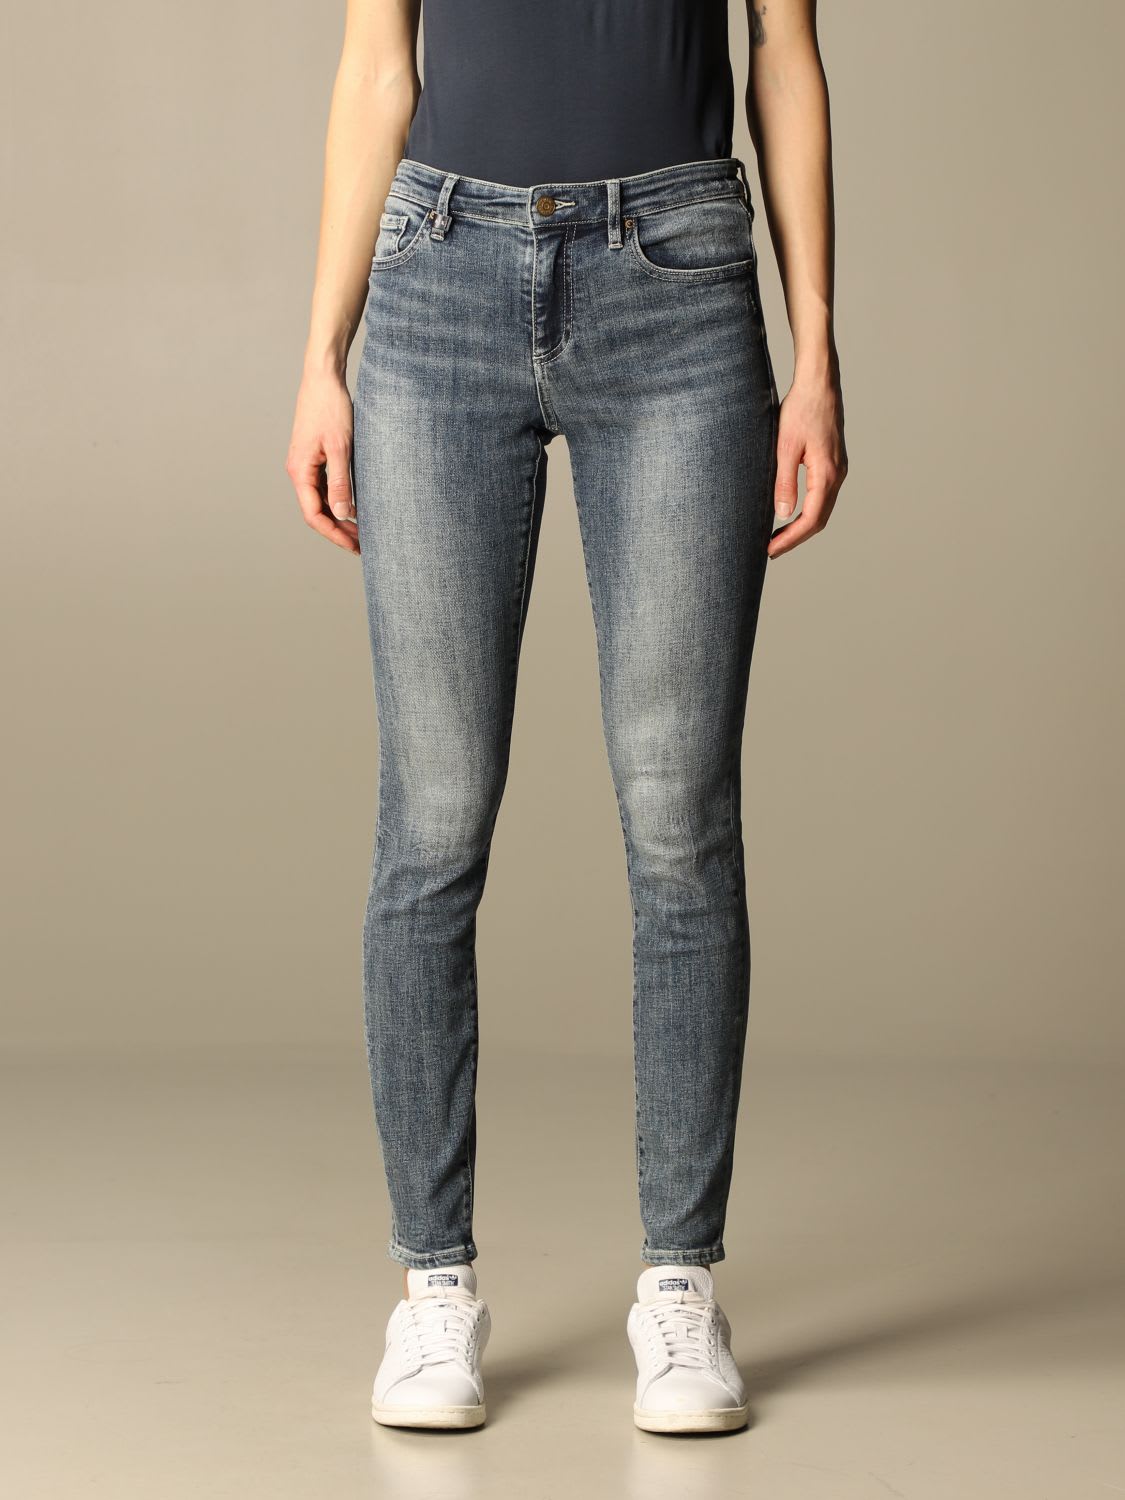 Armani Collezioni Armani Exchange Jeans Used Stretch Denim With Regular Waist And Skinny Leg